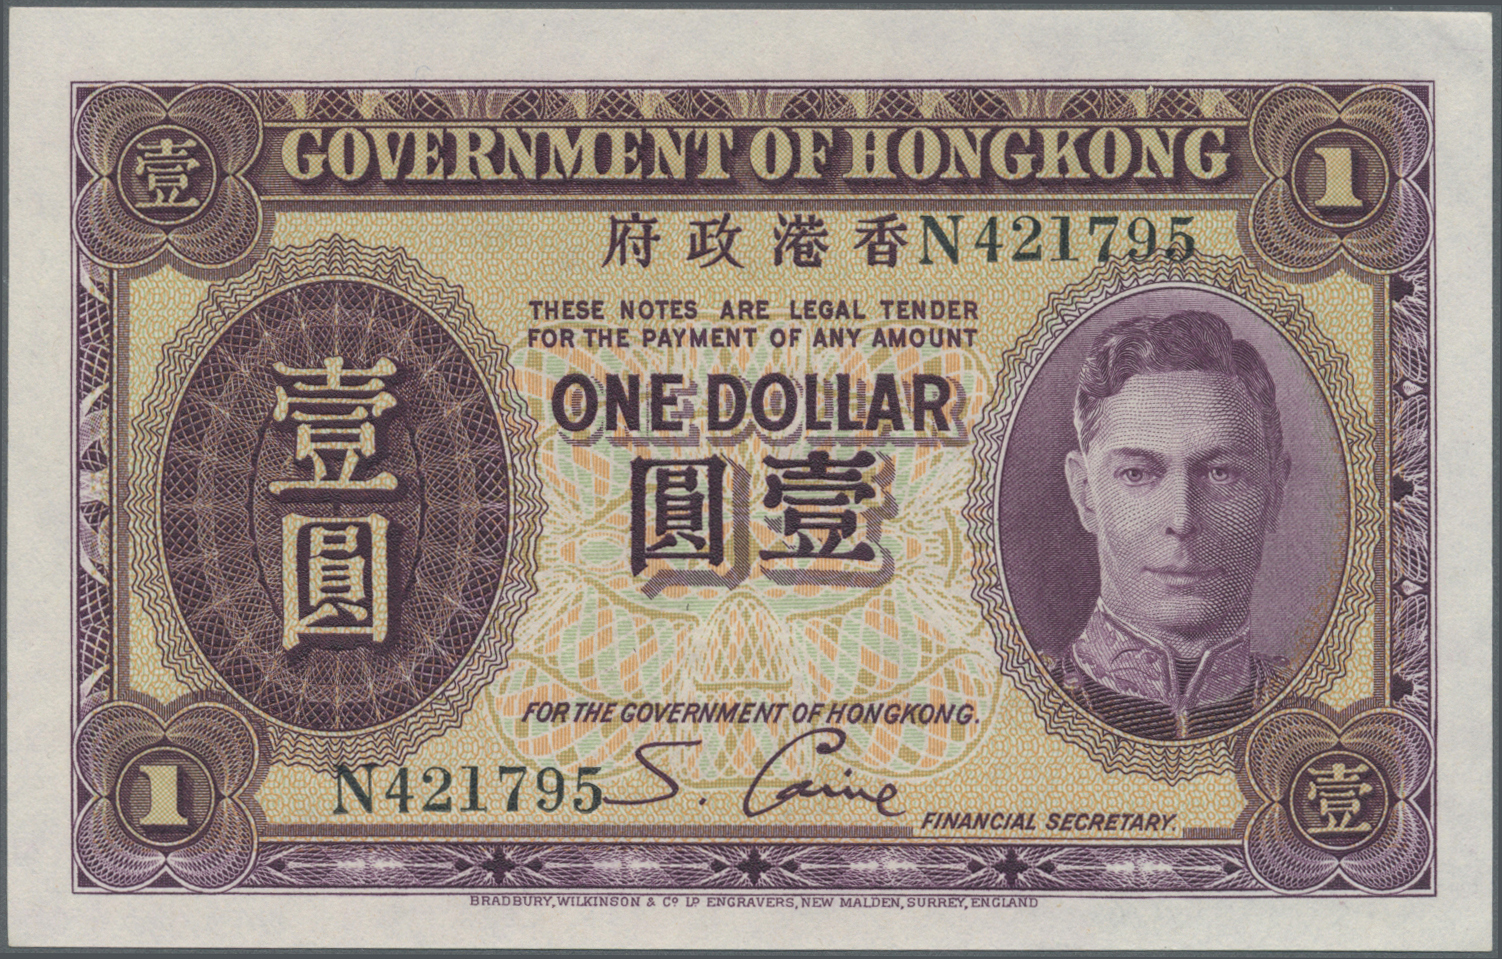 01001 Hong Kong: 1 Dollar ND P. 312, In Rarely Seen Condition, Never Folded, No Holes Or Tear, Original Crisp, Only A Li - Hong Kong